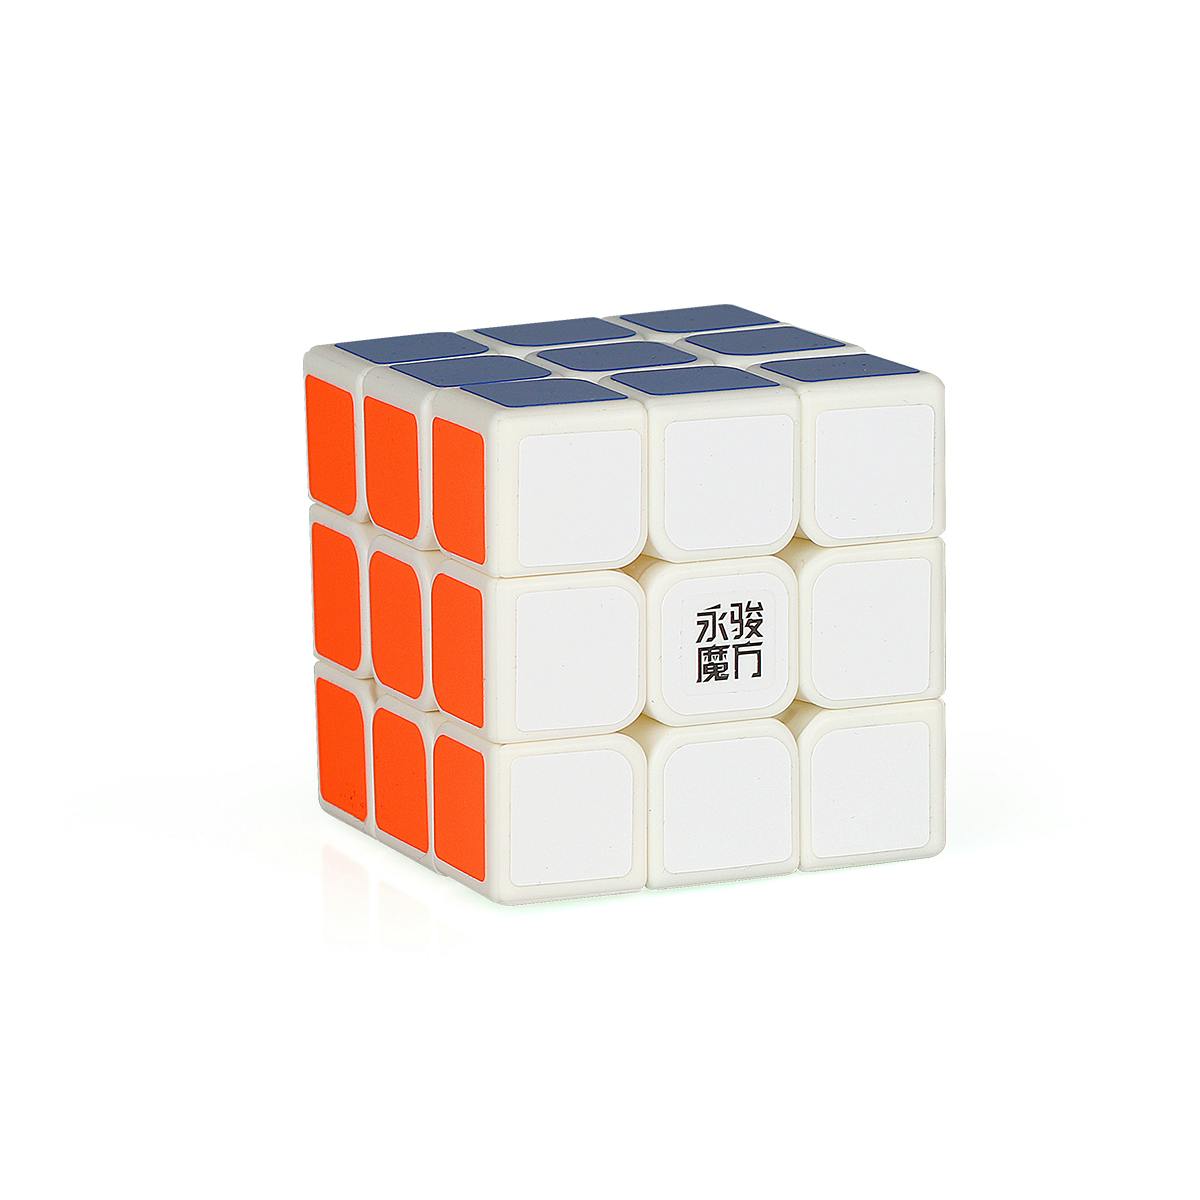 YJ Guanlong 3x3x3 V4 - White